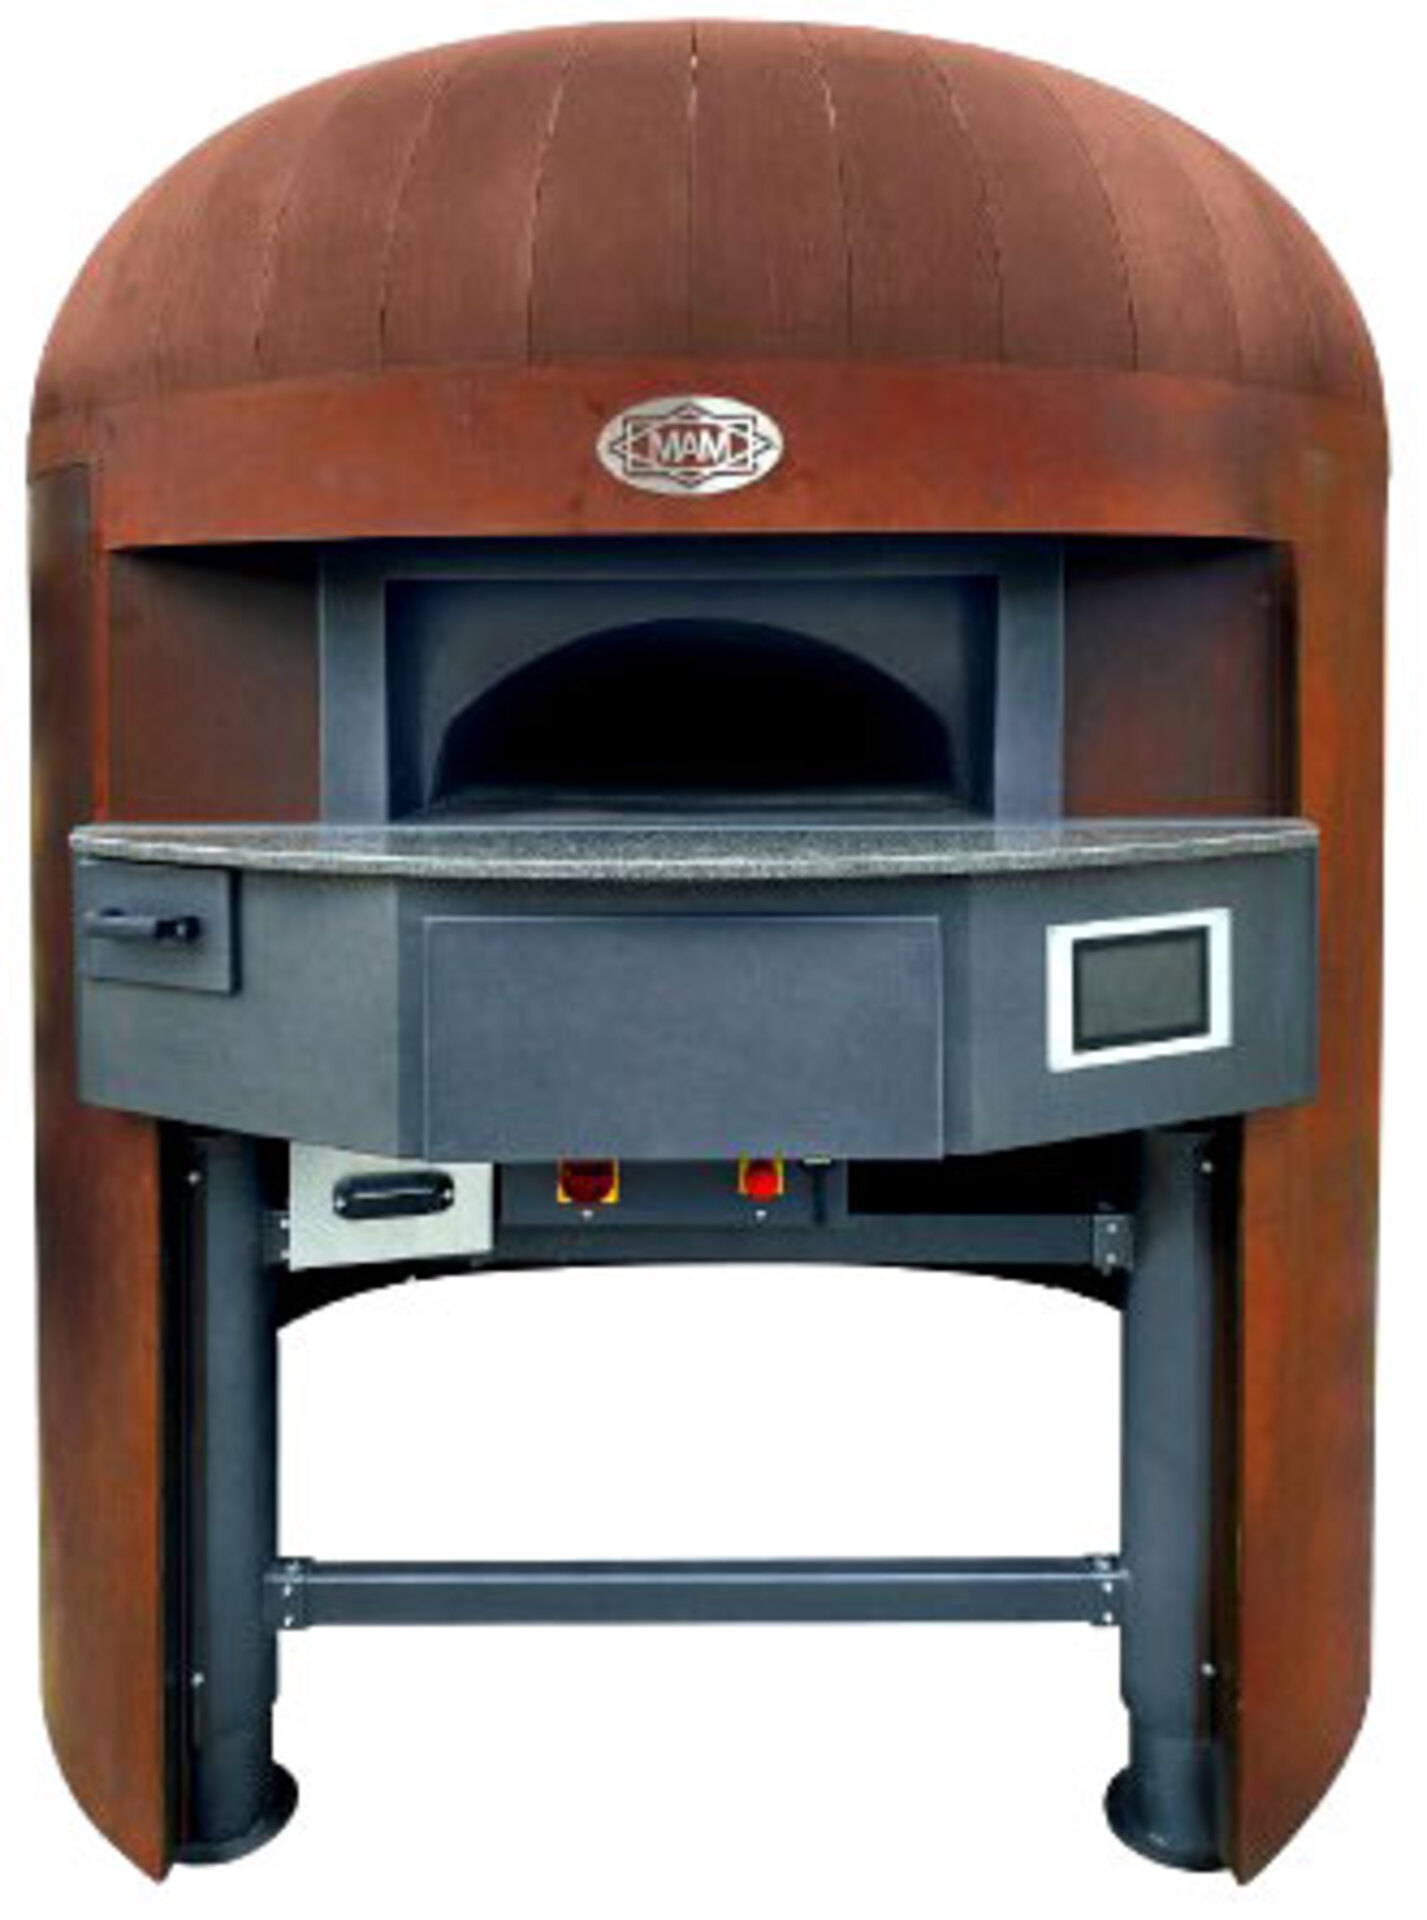 Professional pizza ovens - MAM